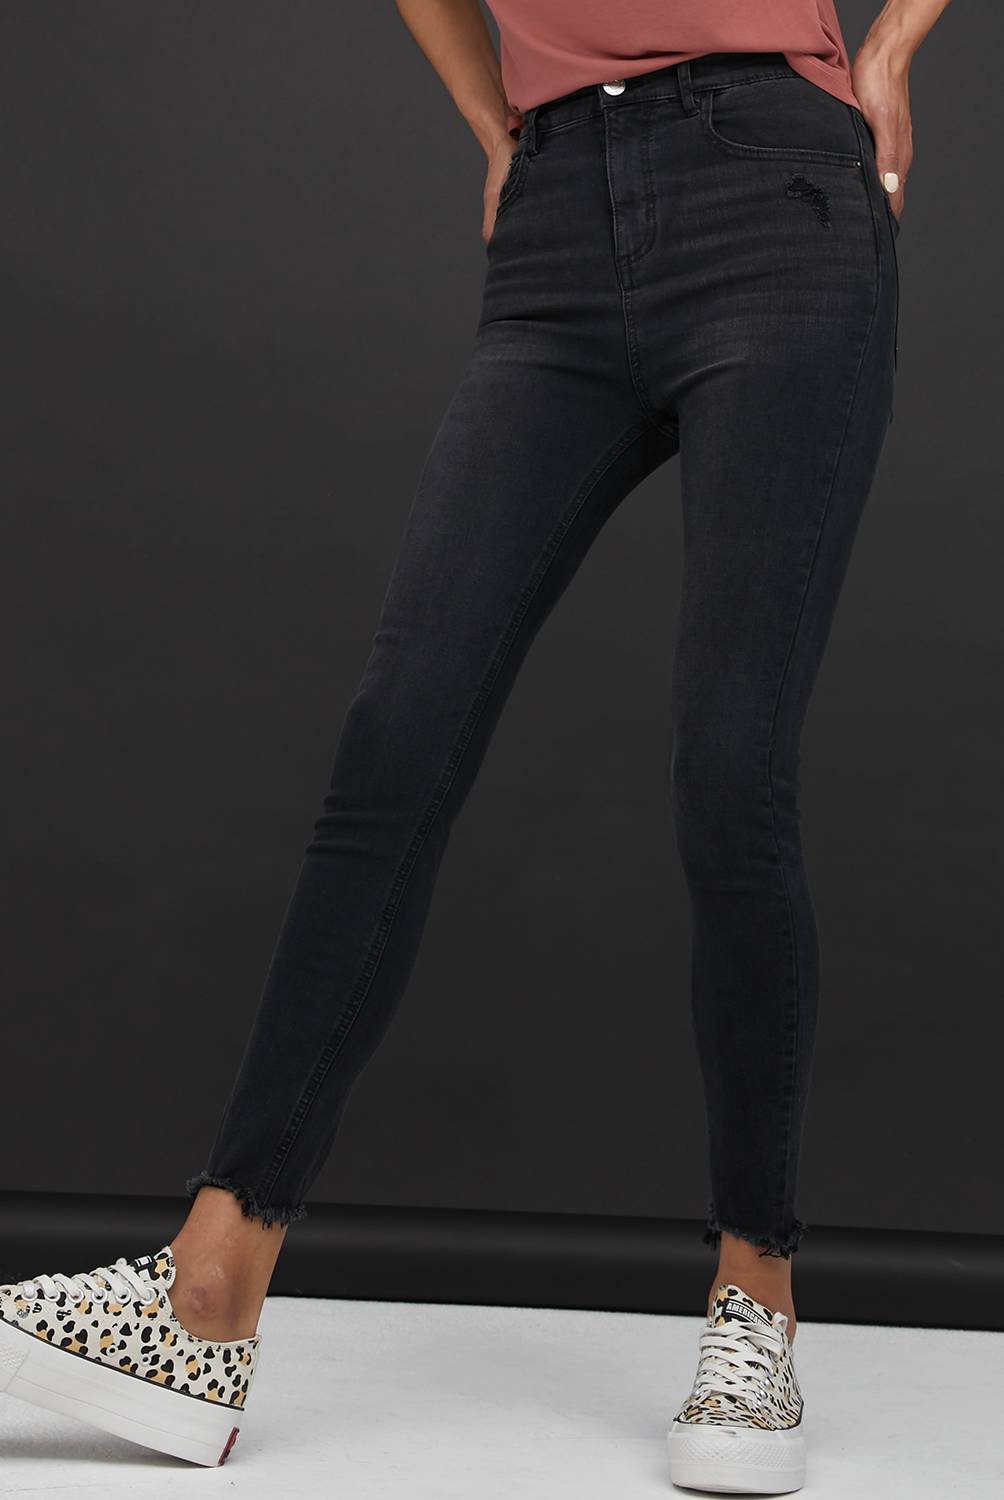 AMERICANINO - Jeans Skinny Súper Tiro Alto Mujer